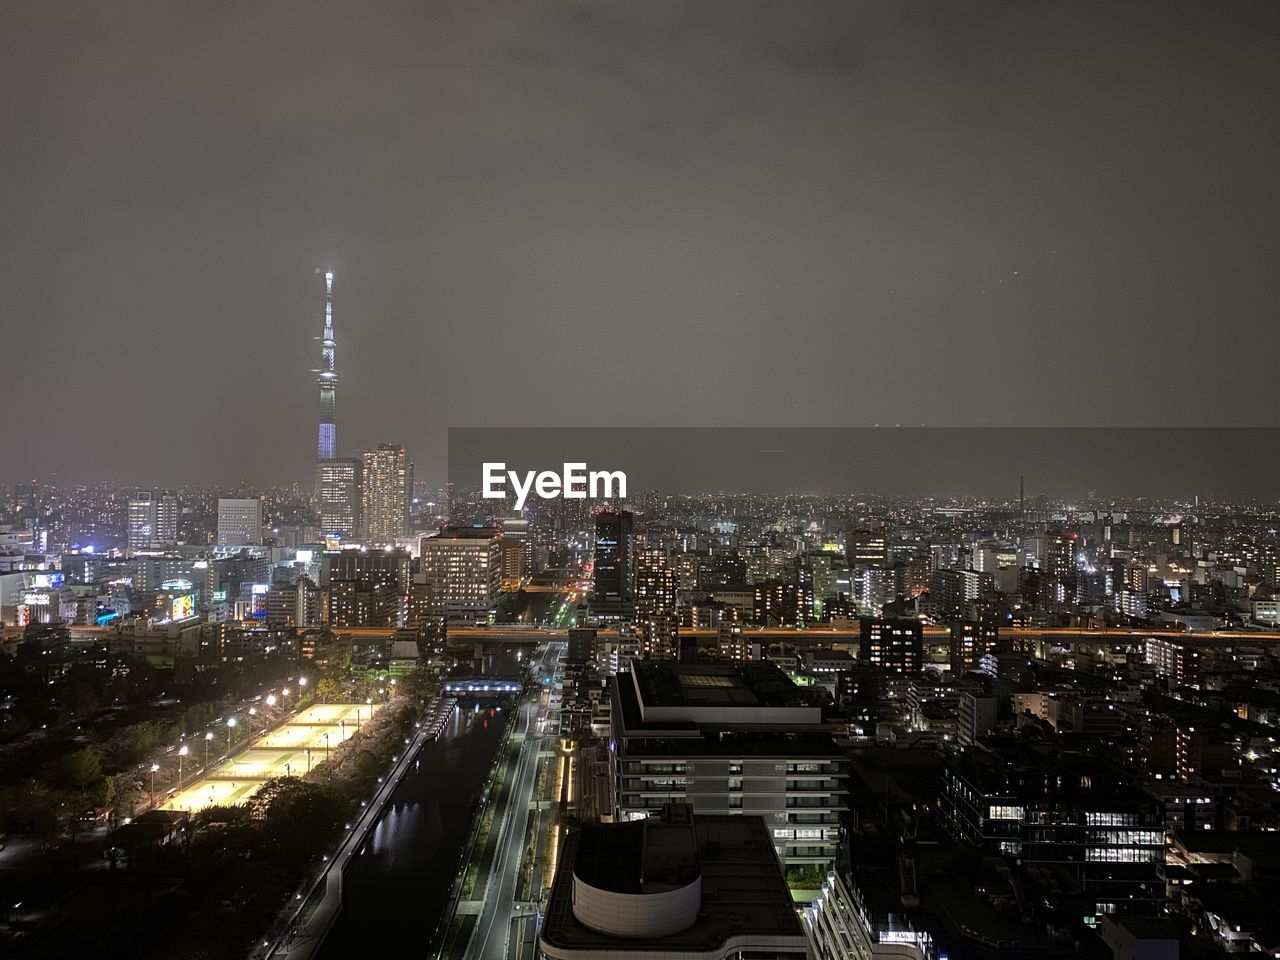 The night sky and the illuminated cityscape of tokyo